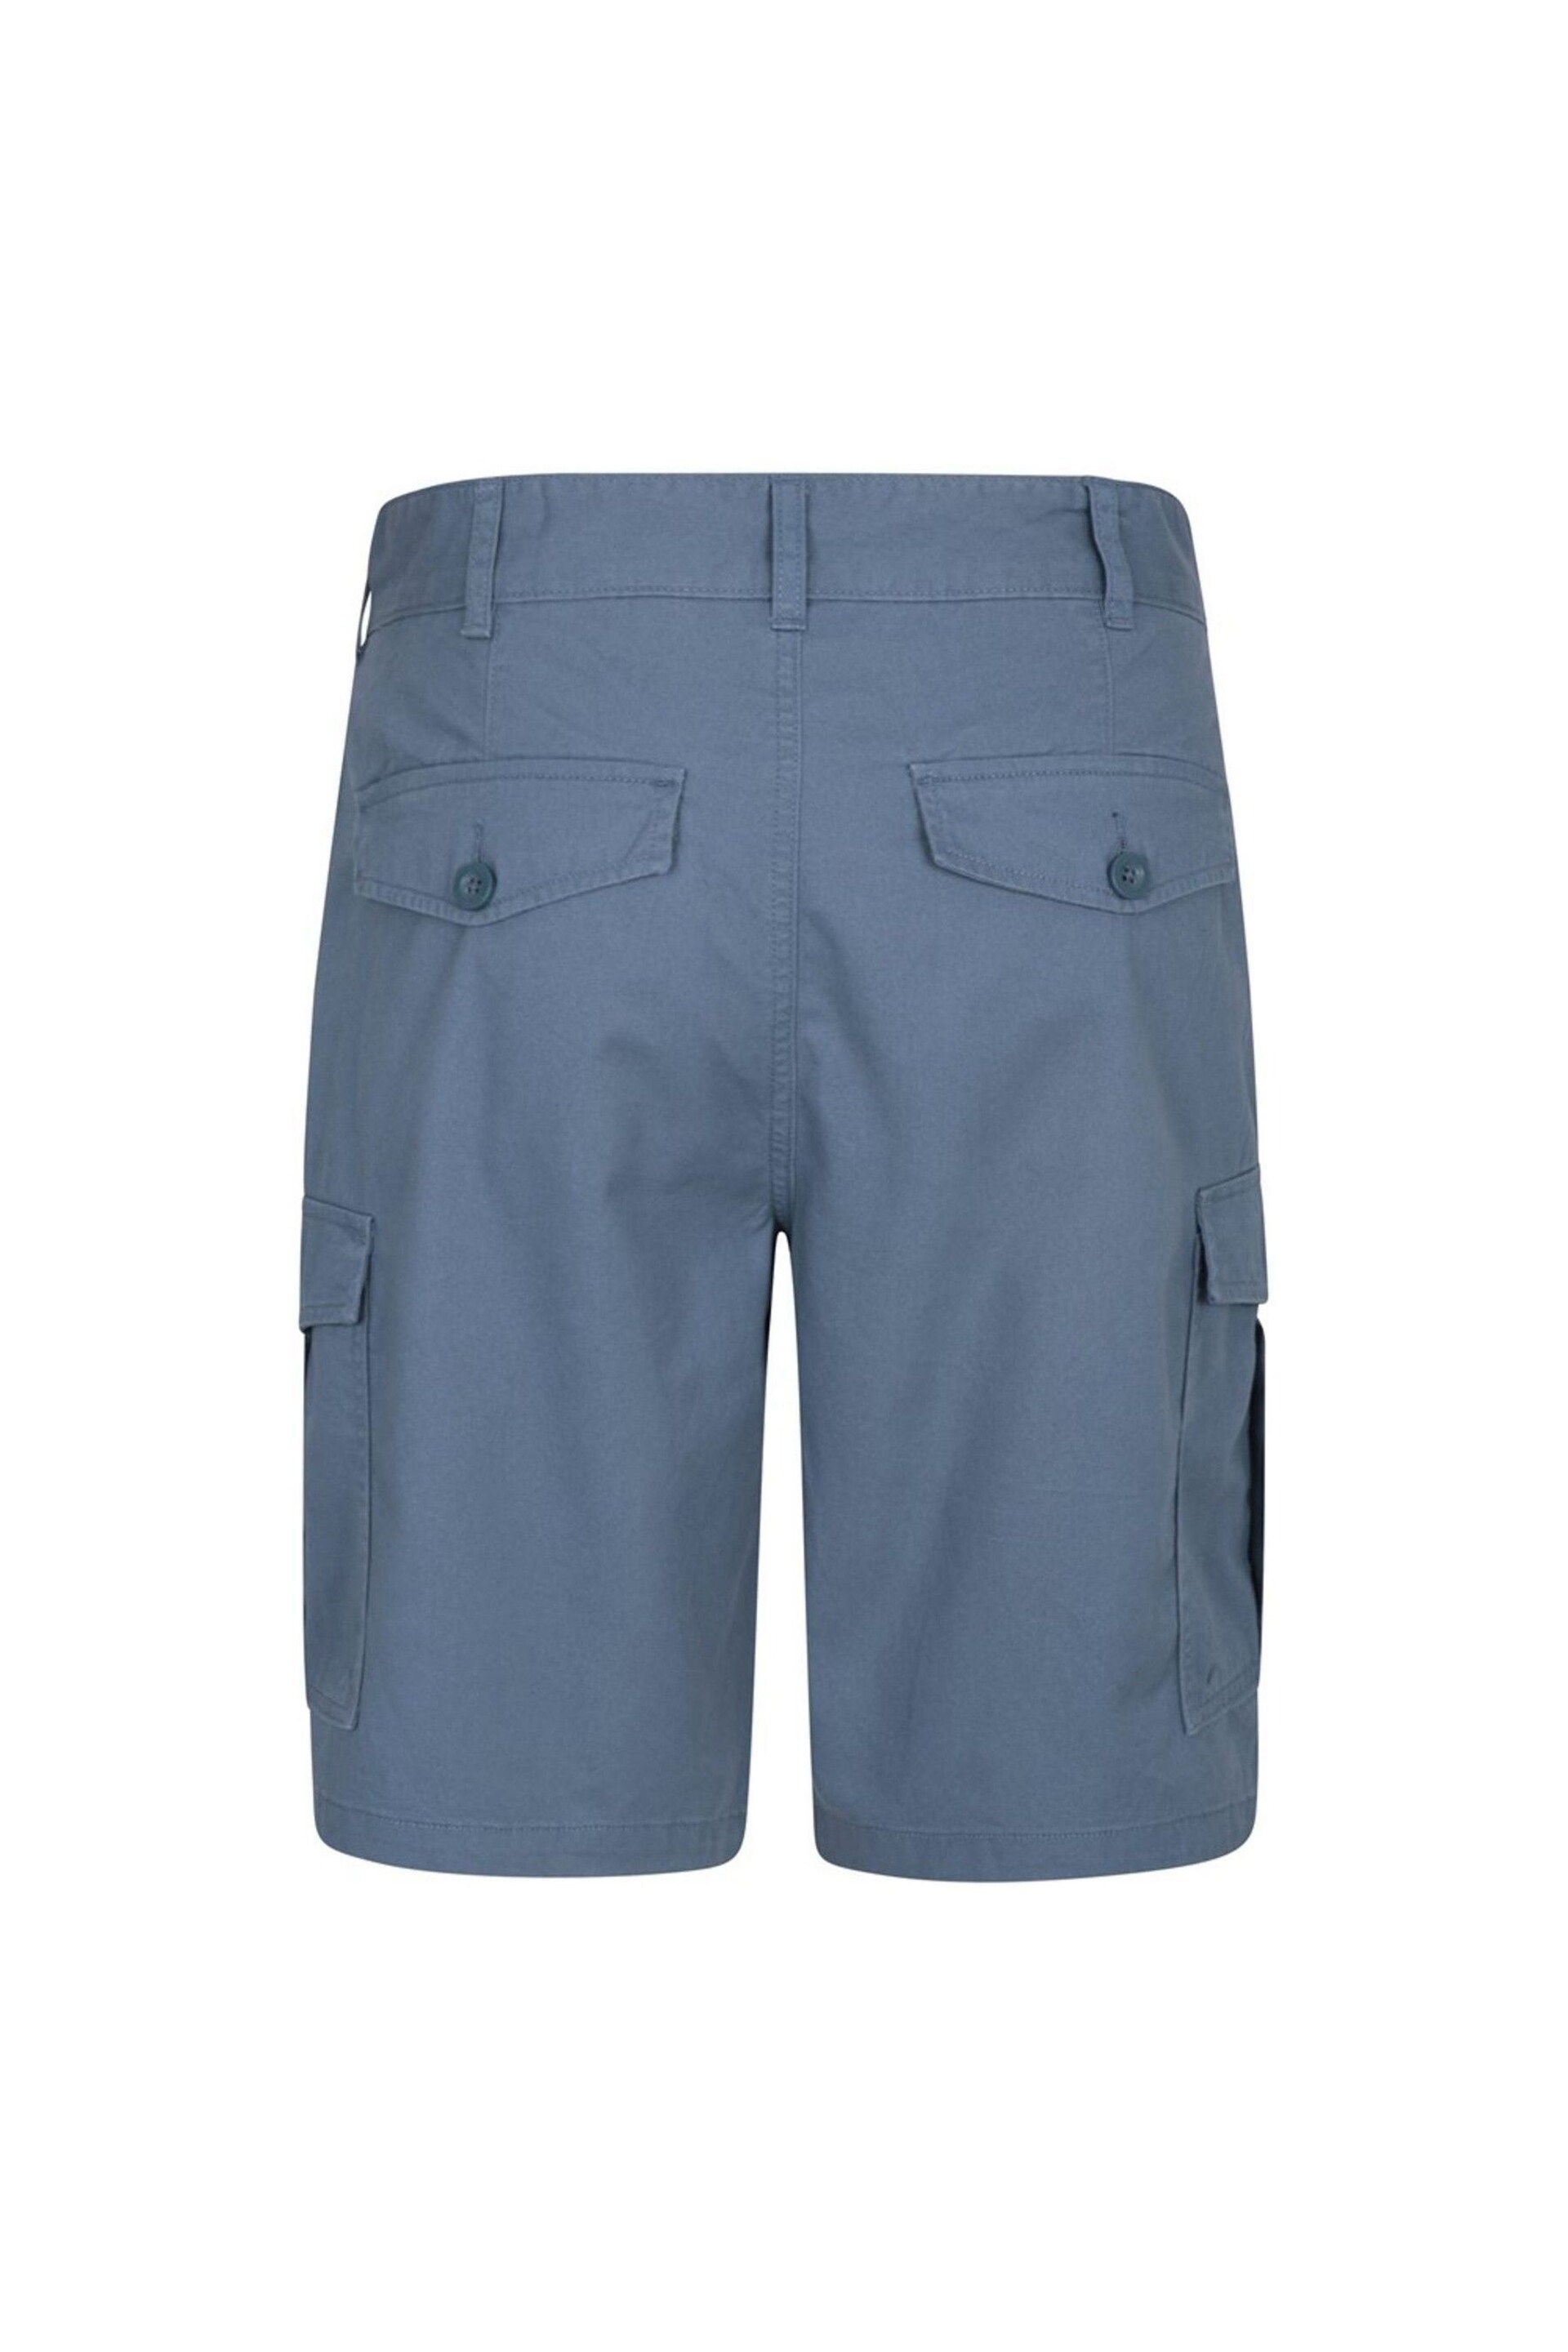 Mountain Warehouse Blue Lakeside Mens Cargo Shorts - Image 4 of 4